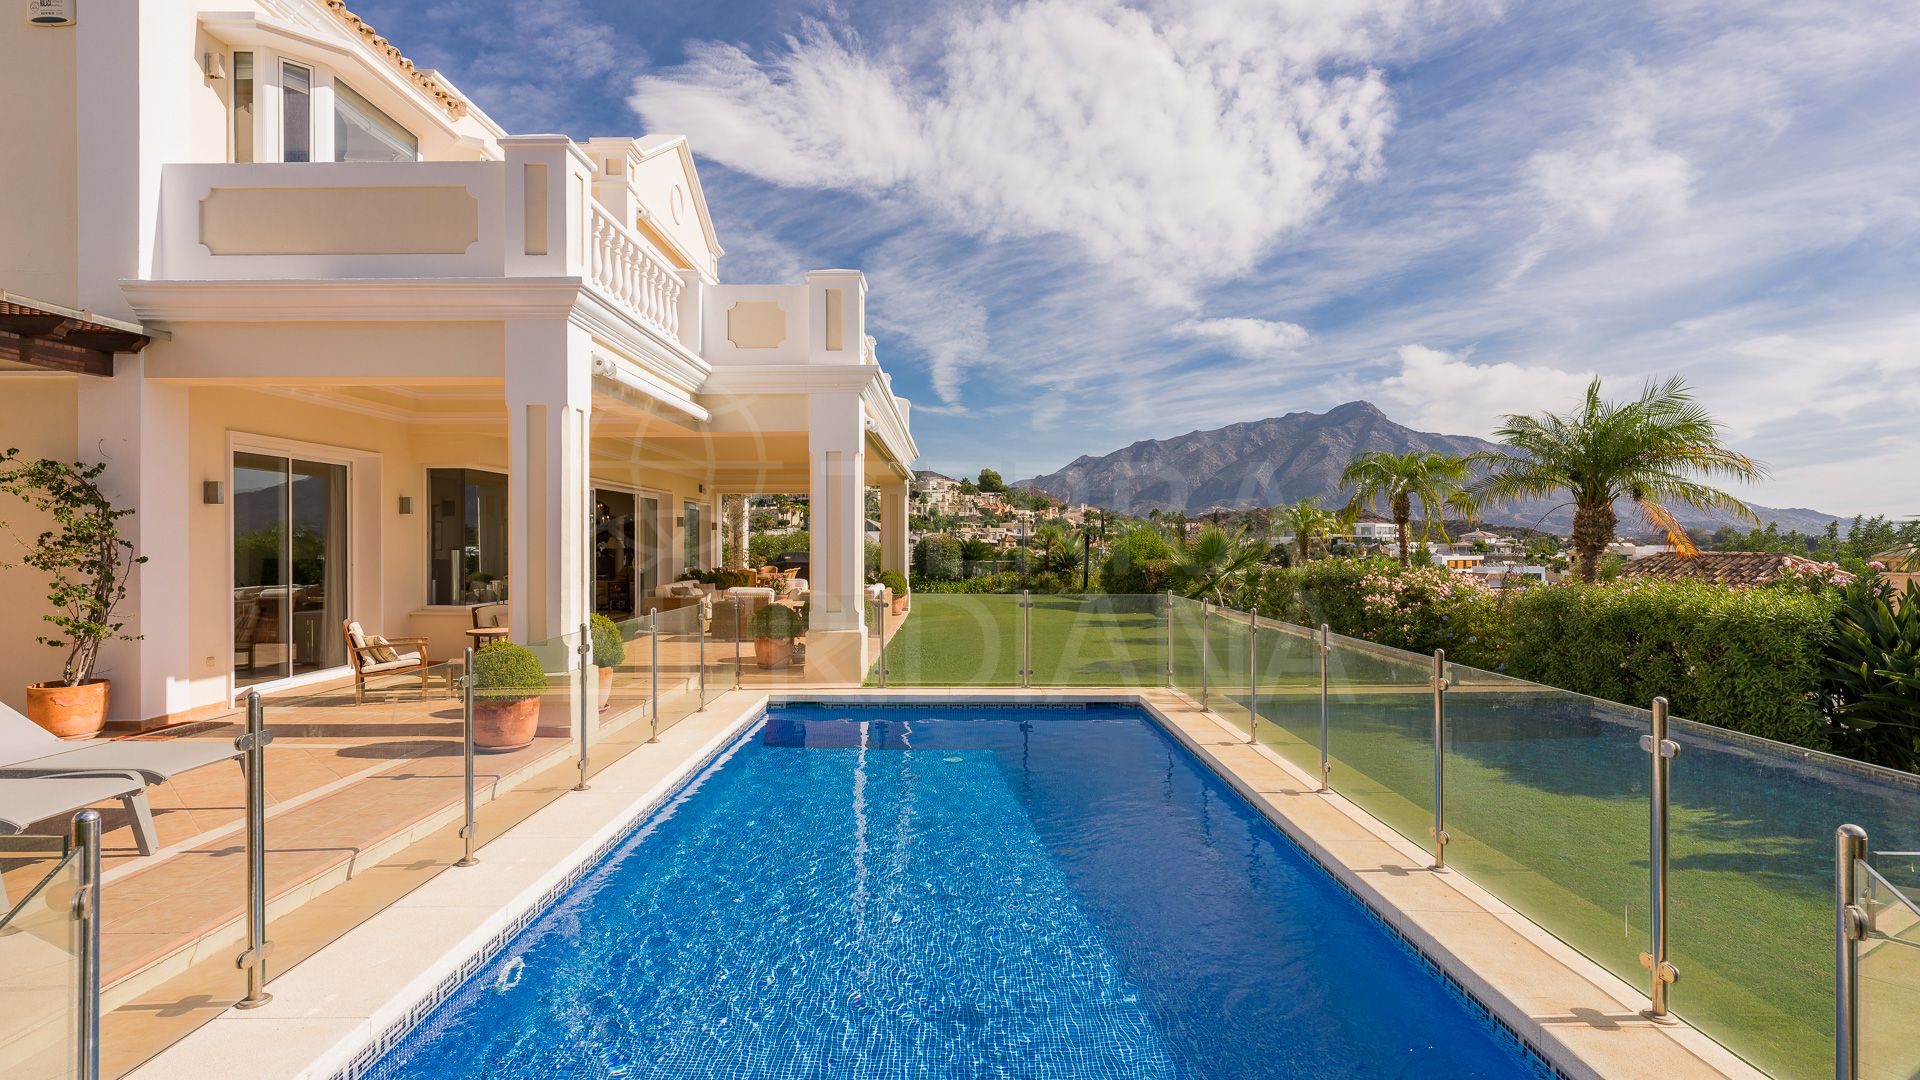 Golf Enthusiast's Dream: Sophisticated Villa with Premium Features for Sale in El Herrojo, Benahavis